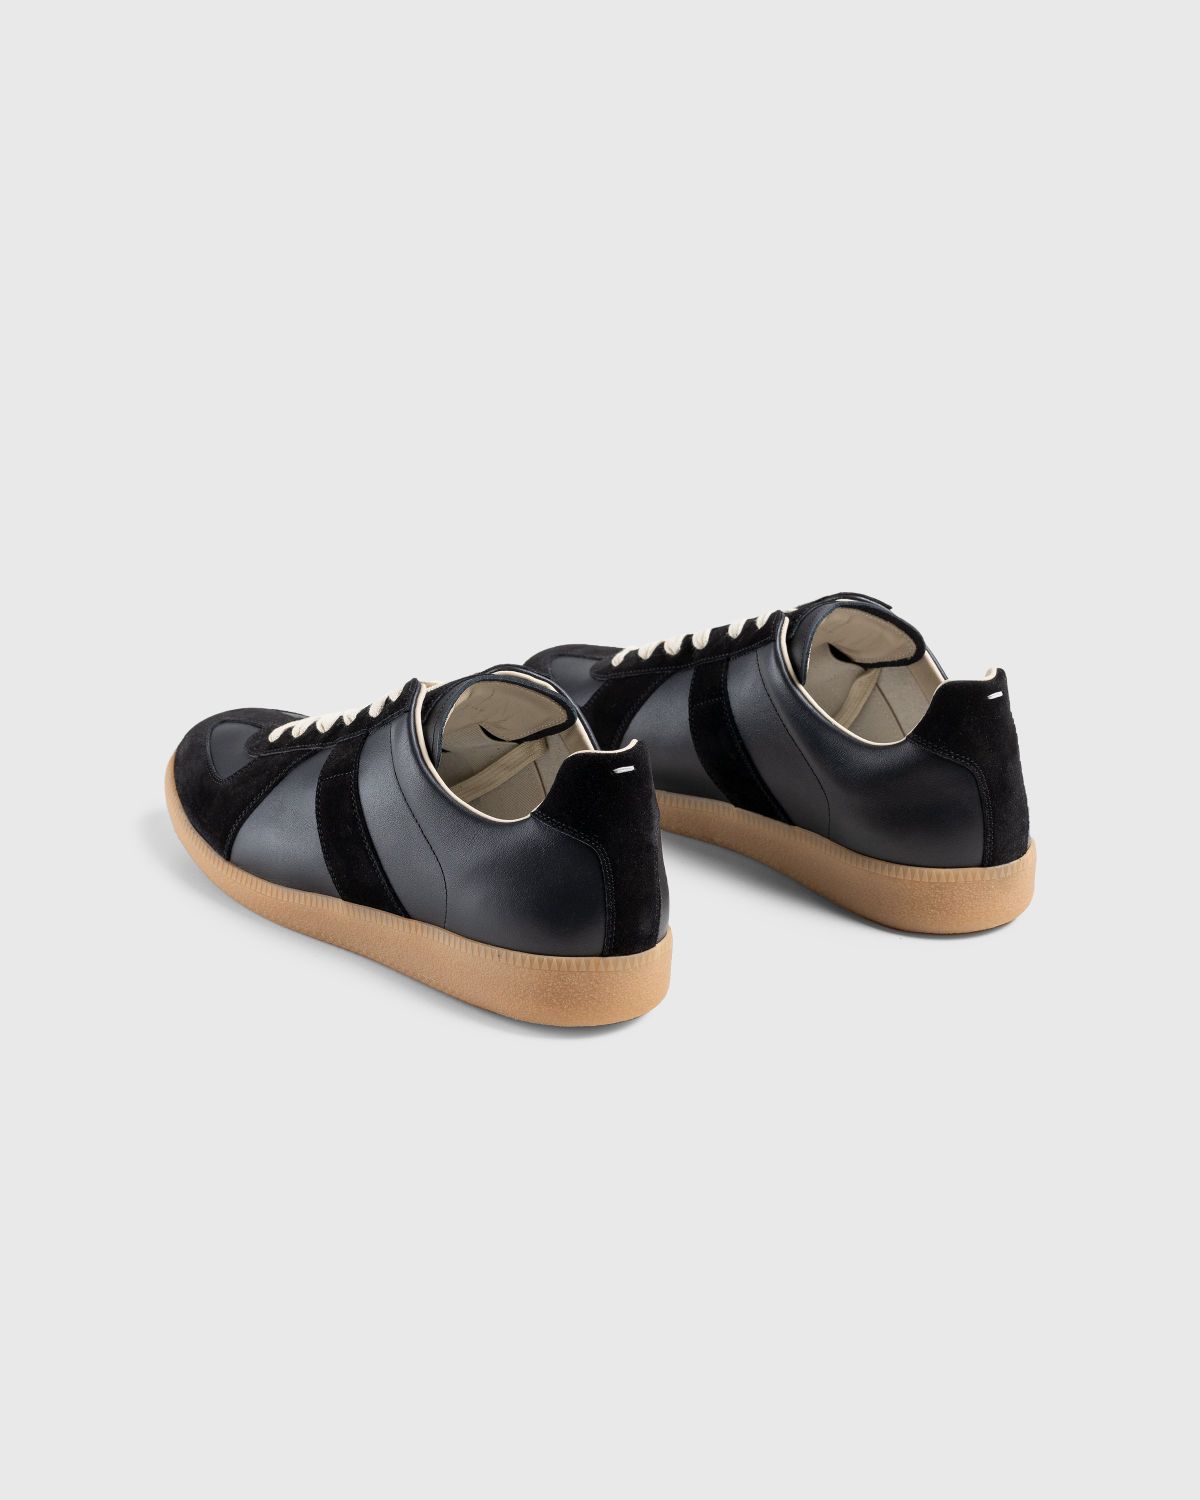 Maison Margiela – Leather Replica Sneakers Black - Sneakers - Black - Image 4